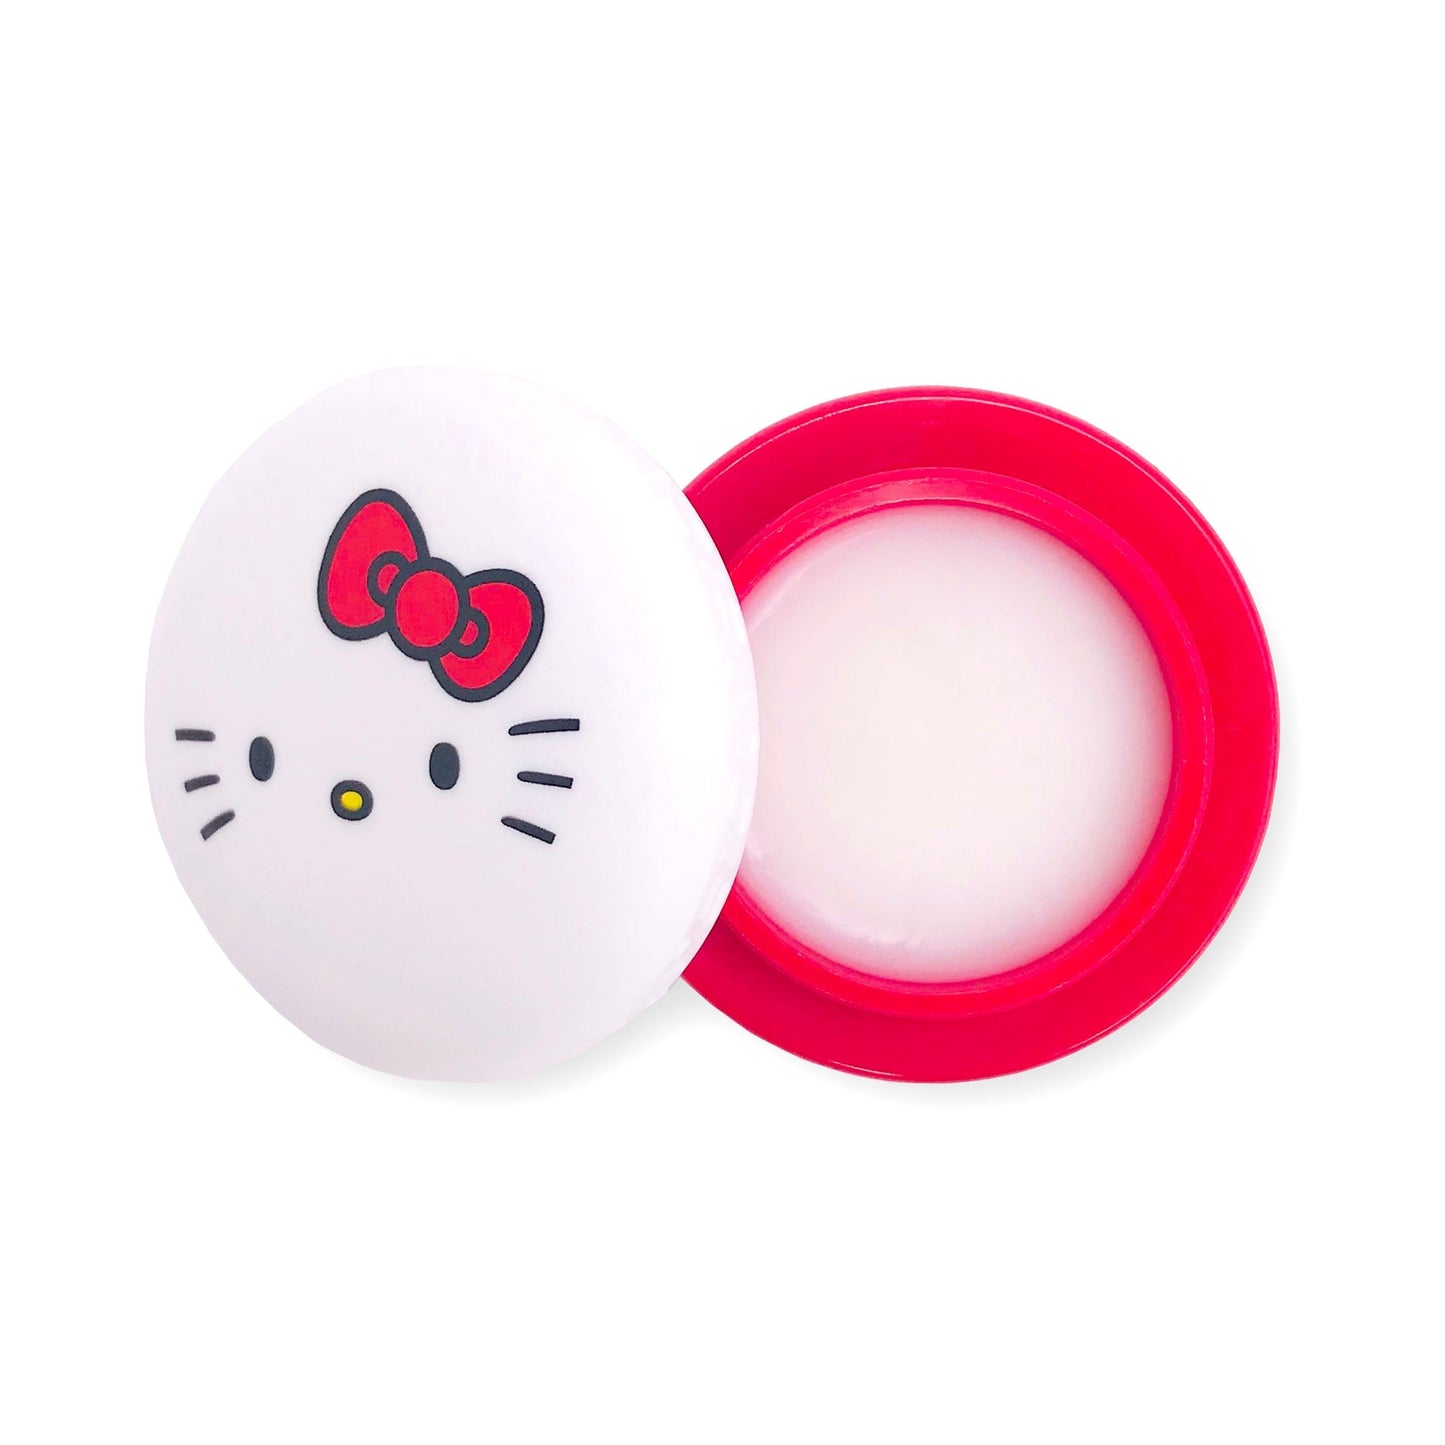 Hello Kitty & BT21 TATA Moisturizing Macaron Lip Balm Duo, Mixed Berry Flavored